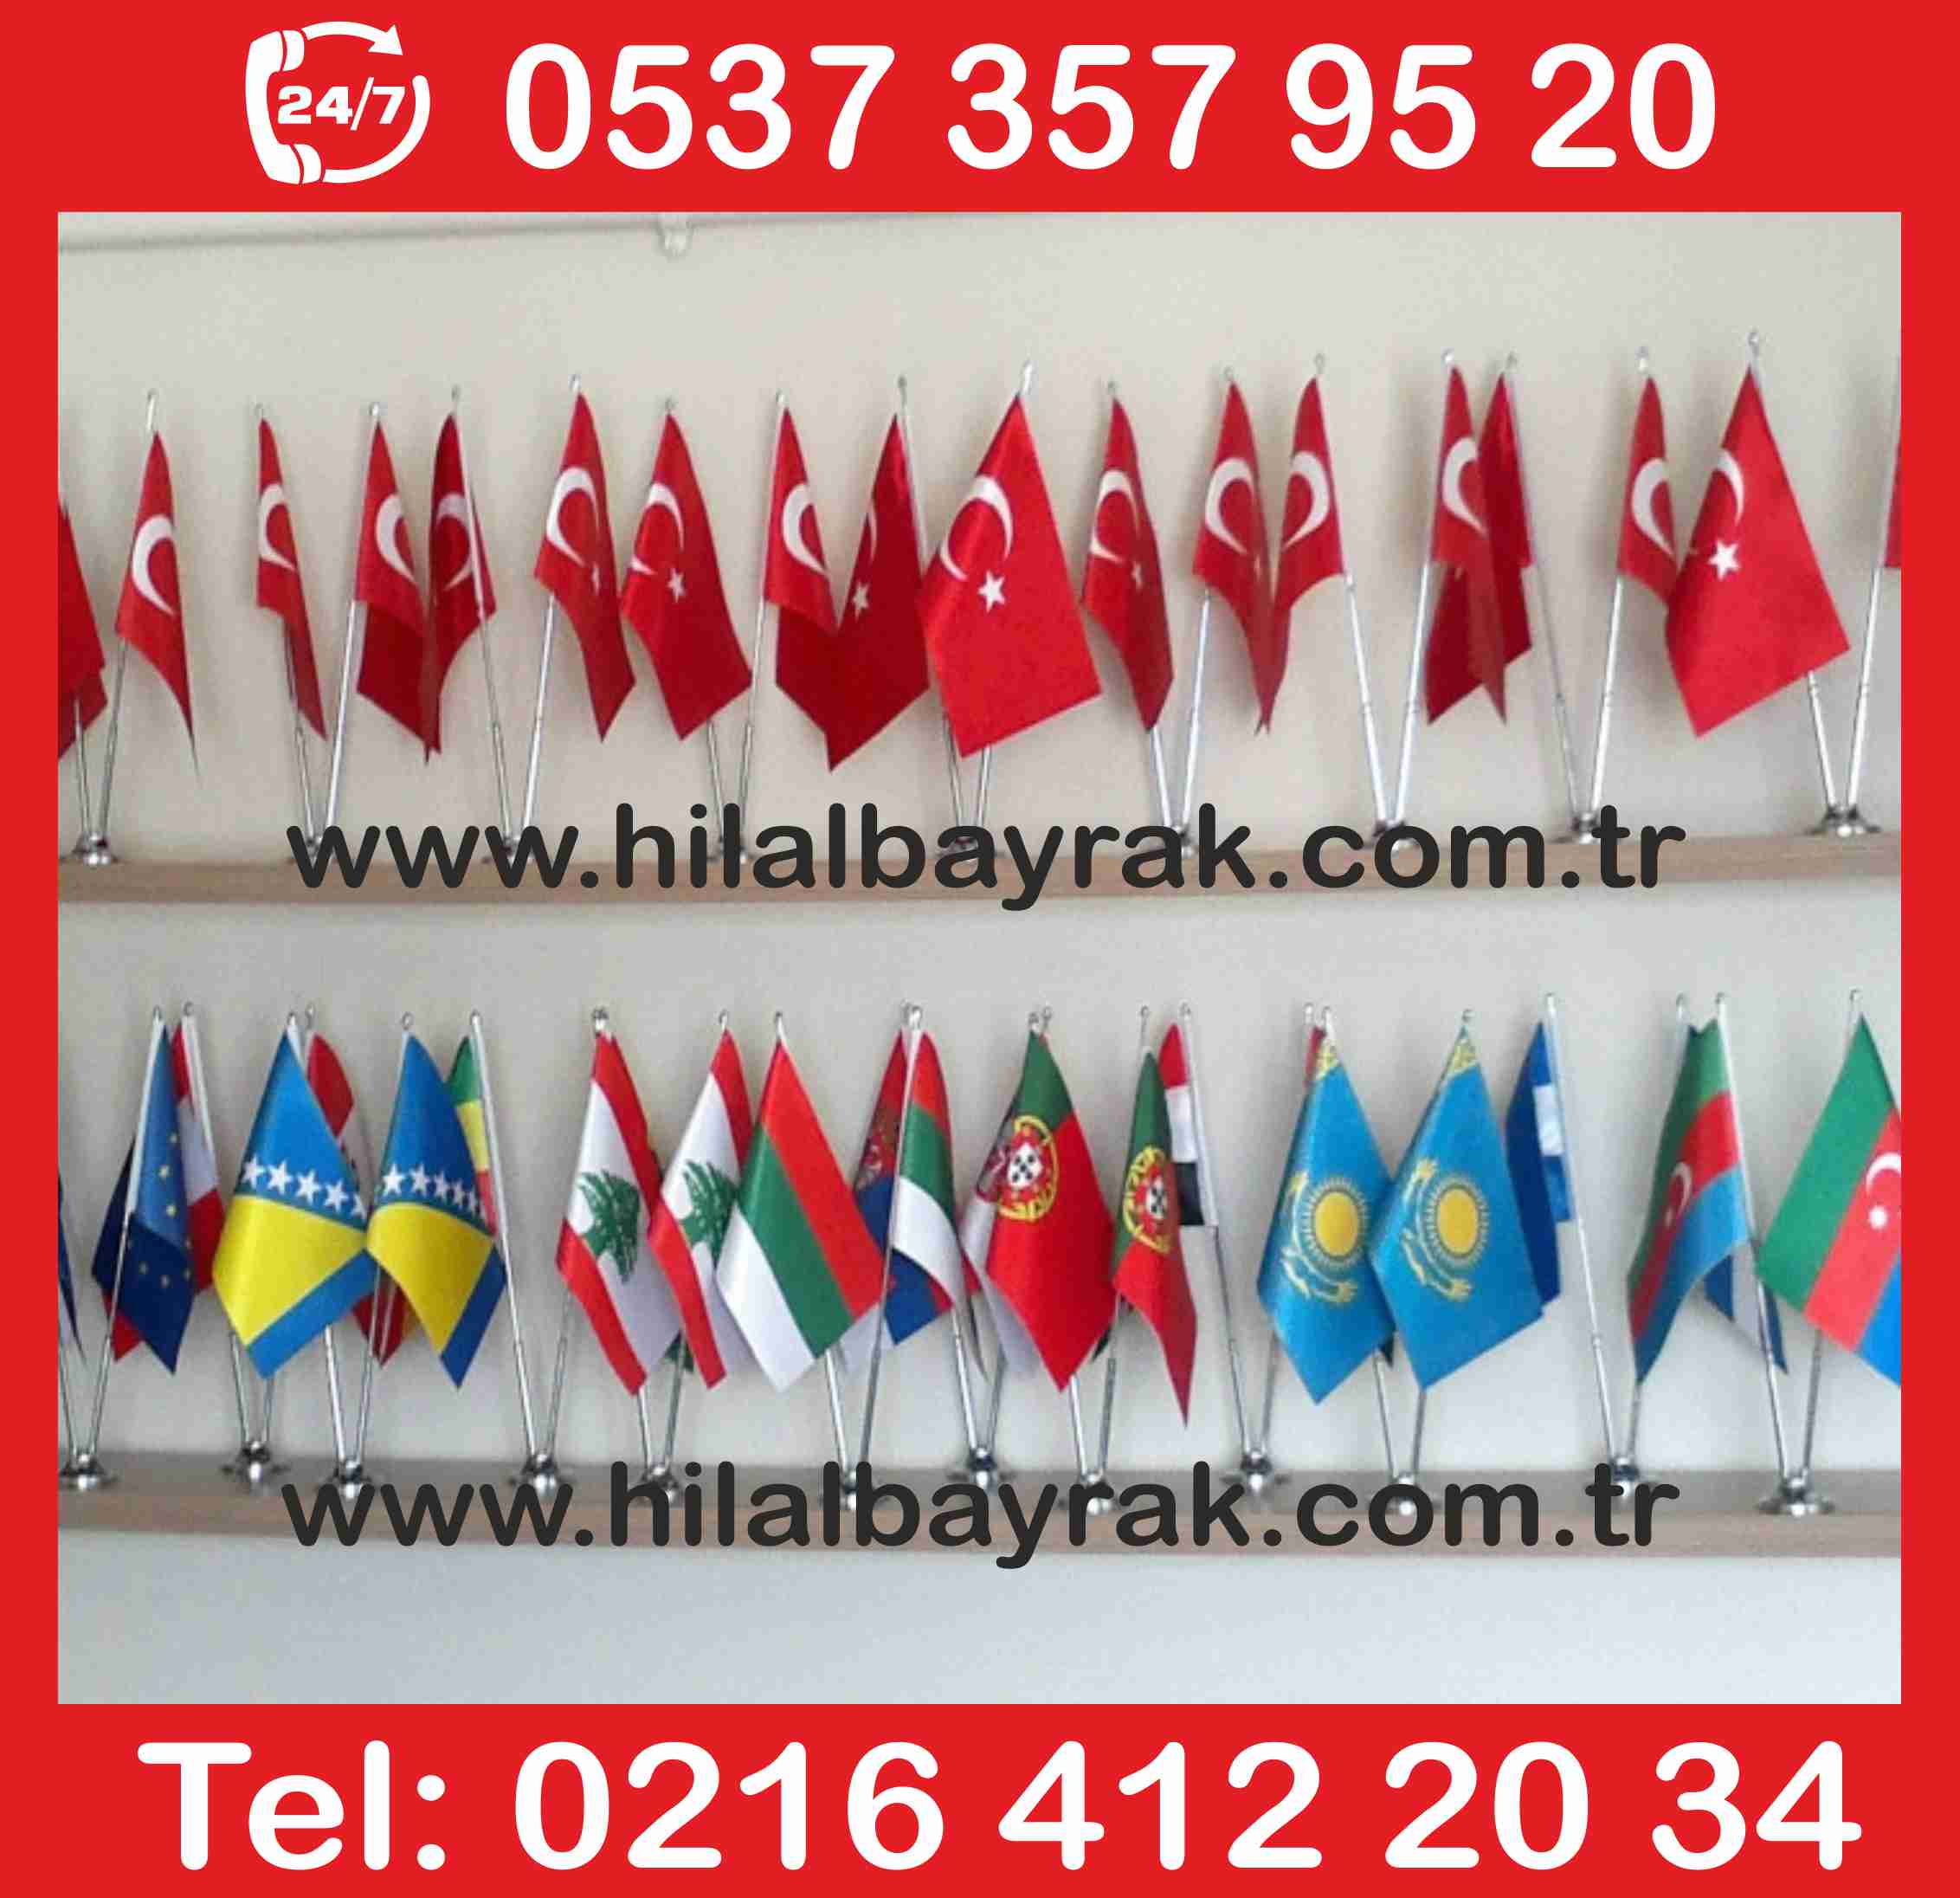 Masa Flama Bayrak  İstanbul, masa bayrak, satışı, masa bayrak  Ümraniye, masa bayrak imalatı, acil masa bayrağı, masa bayrakları, masa bayrak burada satışı ACİL 7.24 SAAT AÇIK HİZMET